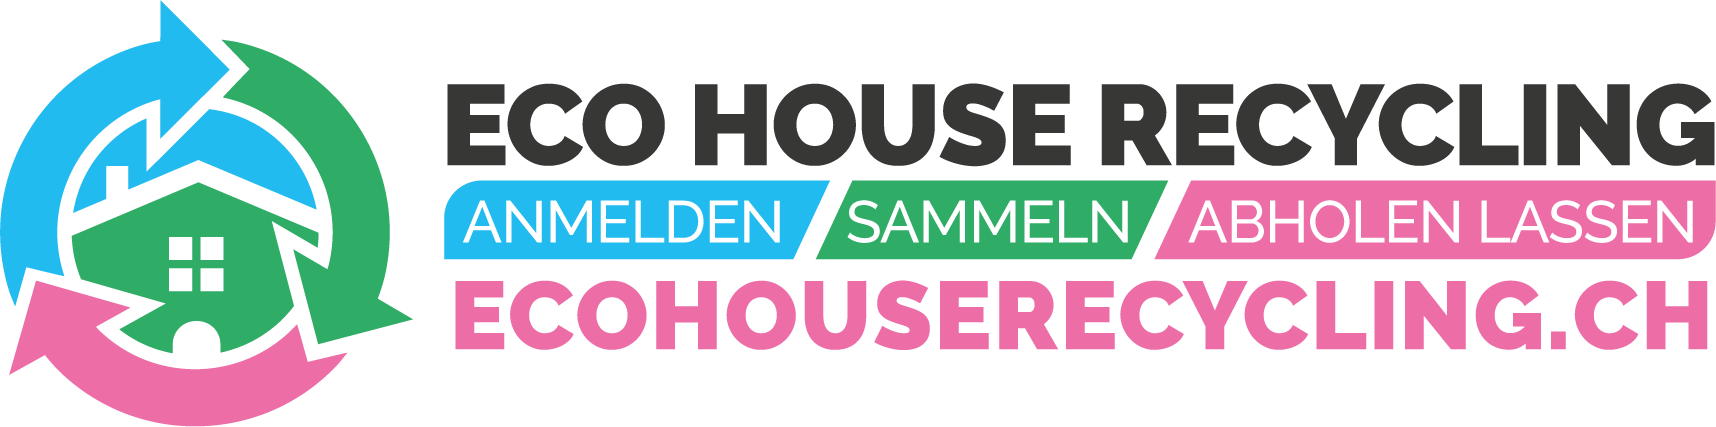 Ecohouse Recycling Logo